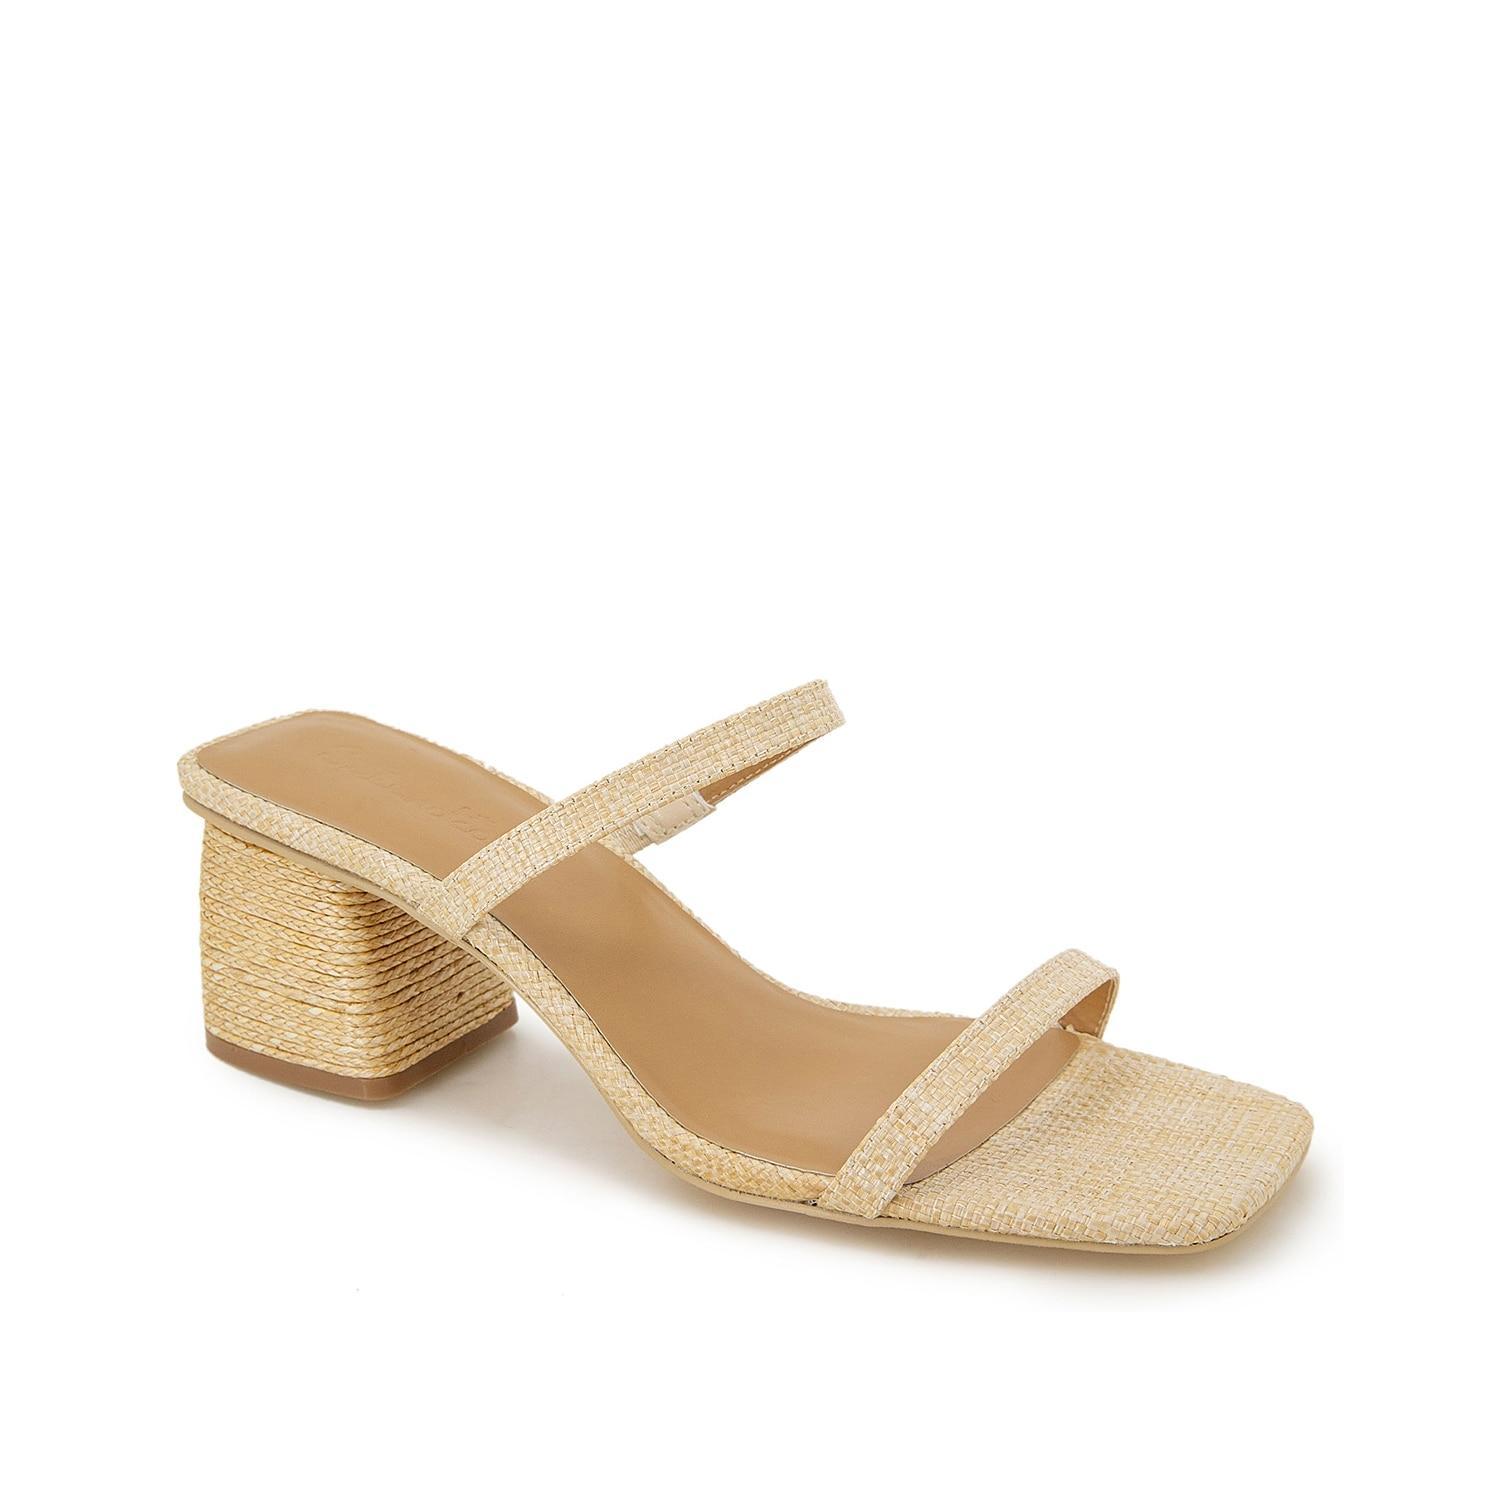 Splendid Kharis Slide Sandal Product Image